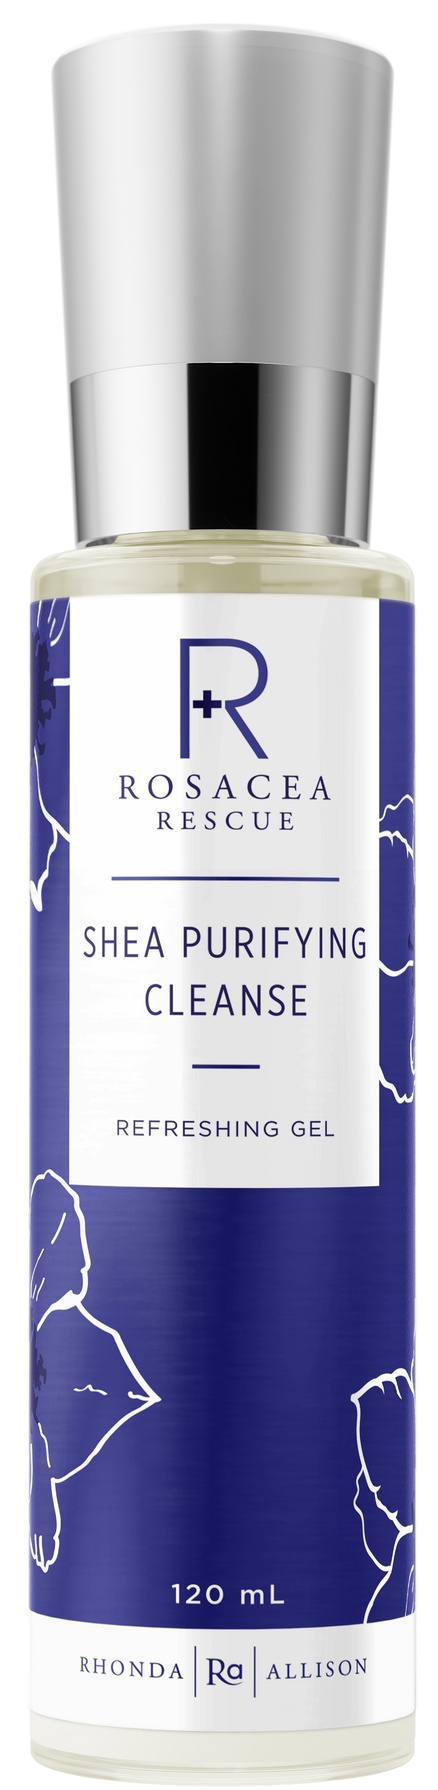 Rhonda Allison Shea Purifying Cleanser